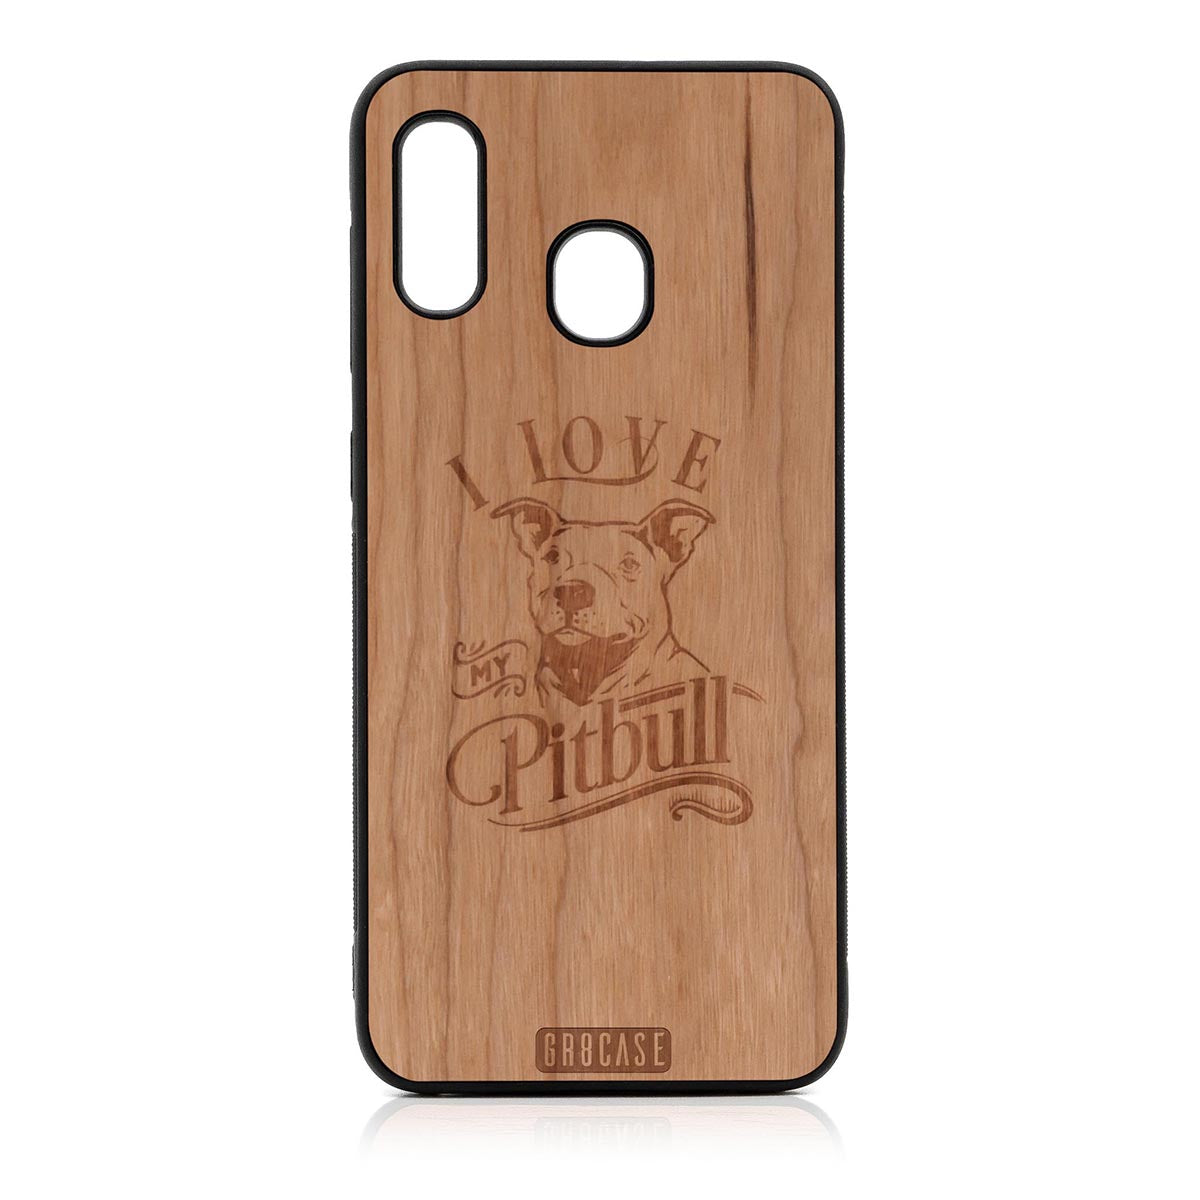 I Love My Pitbull Design Wood Case For Samsung Galaxy A20 by GR8CASE